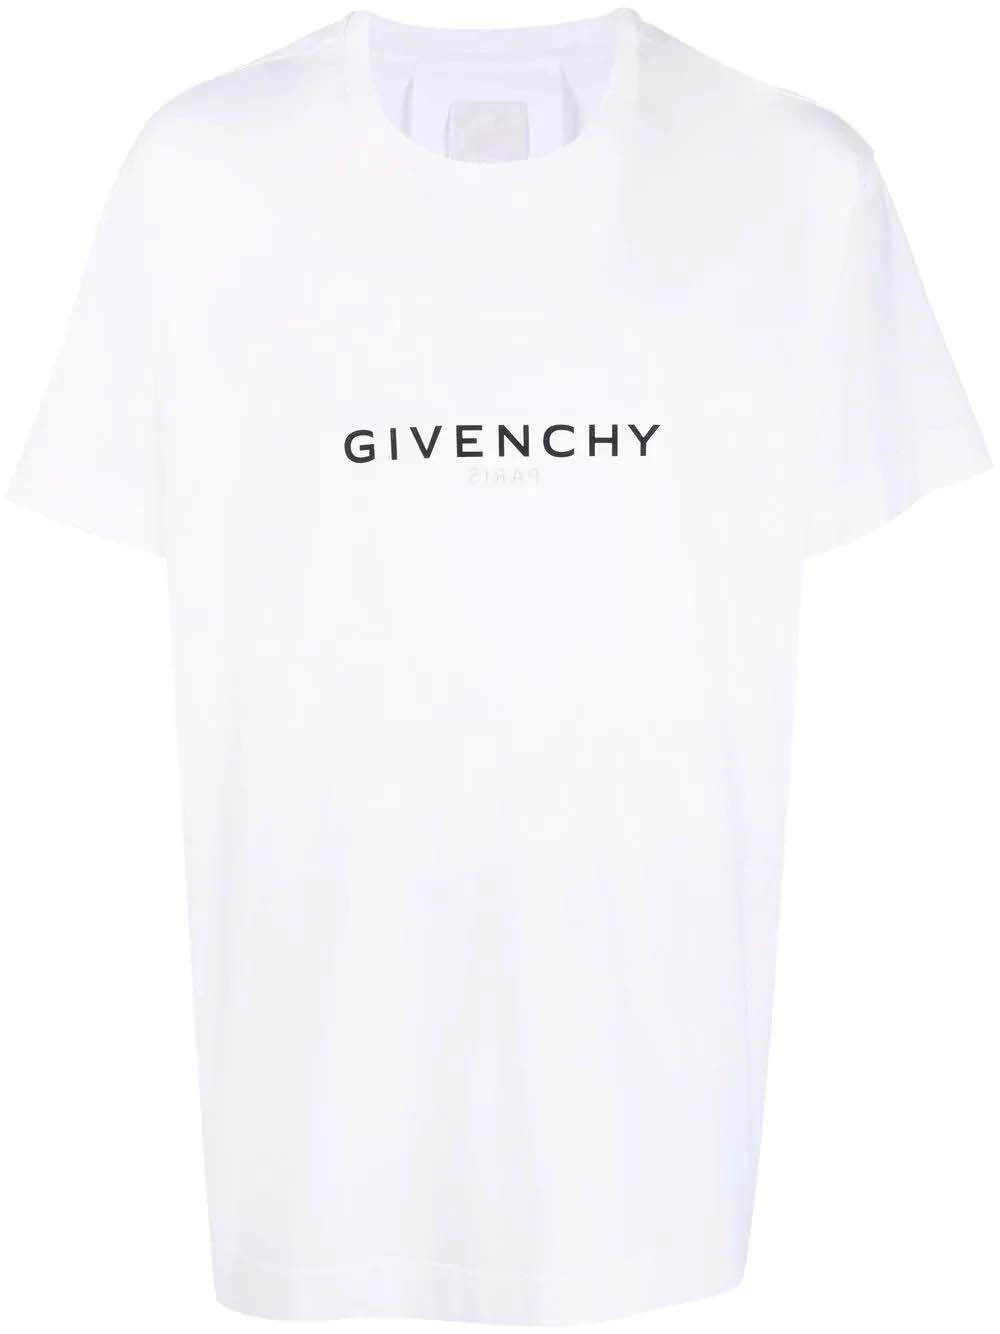 Givenchy Logo T-shirt White/Black Men's - US